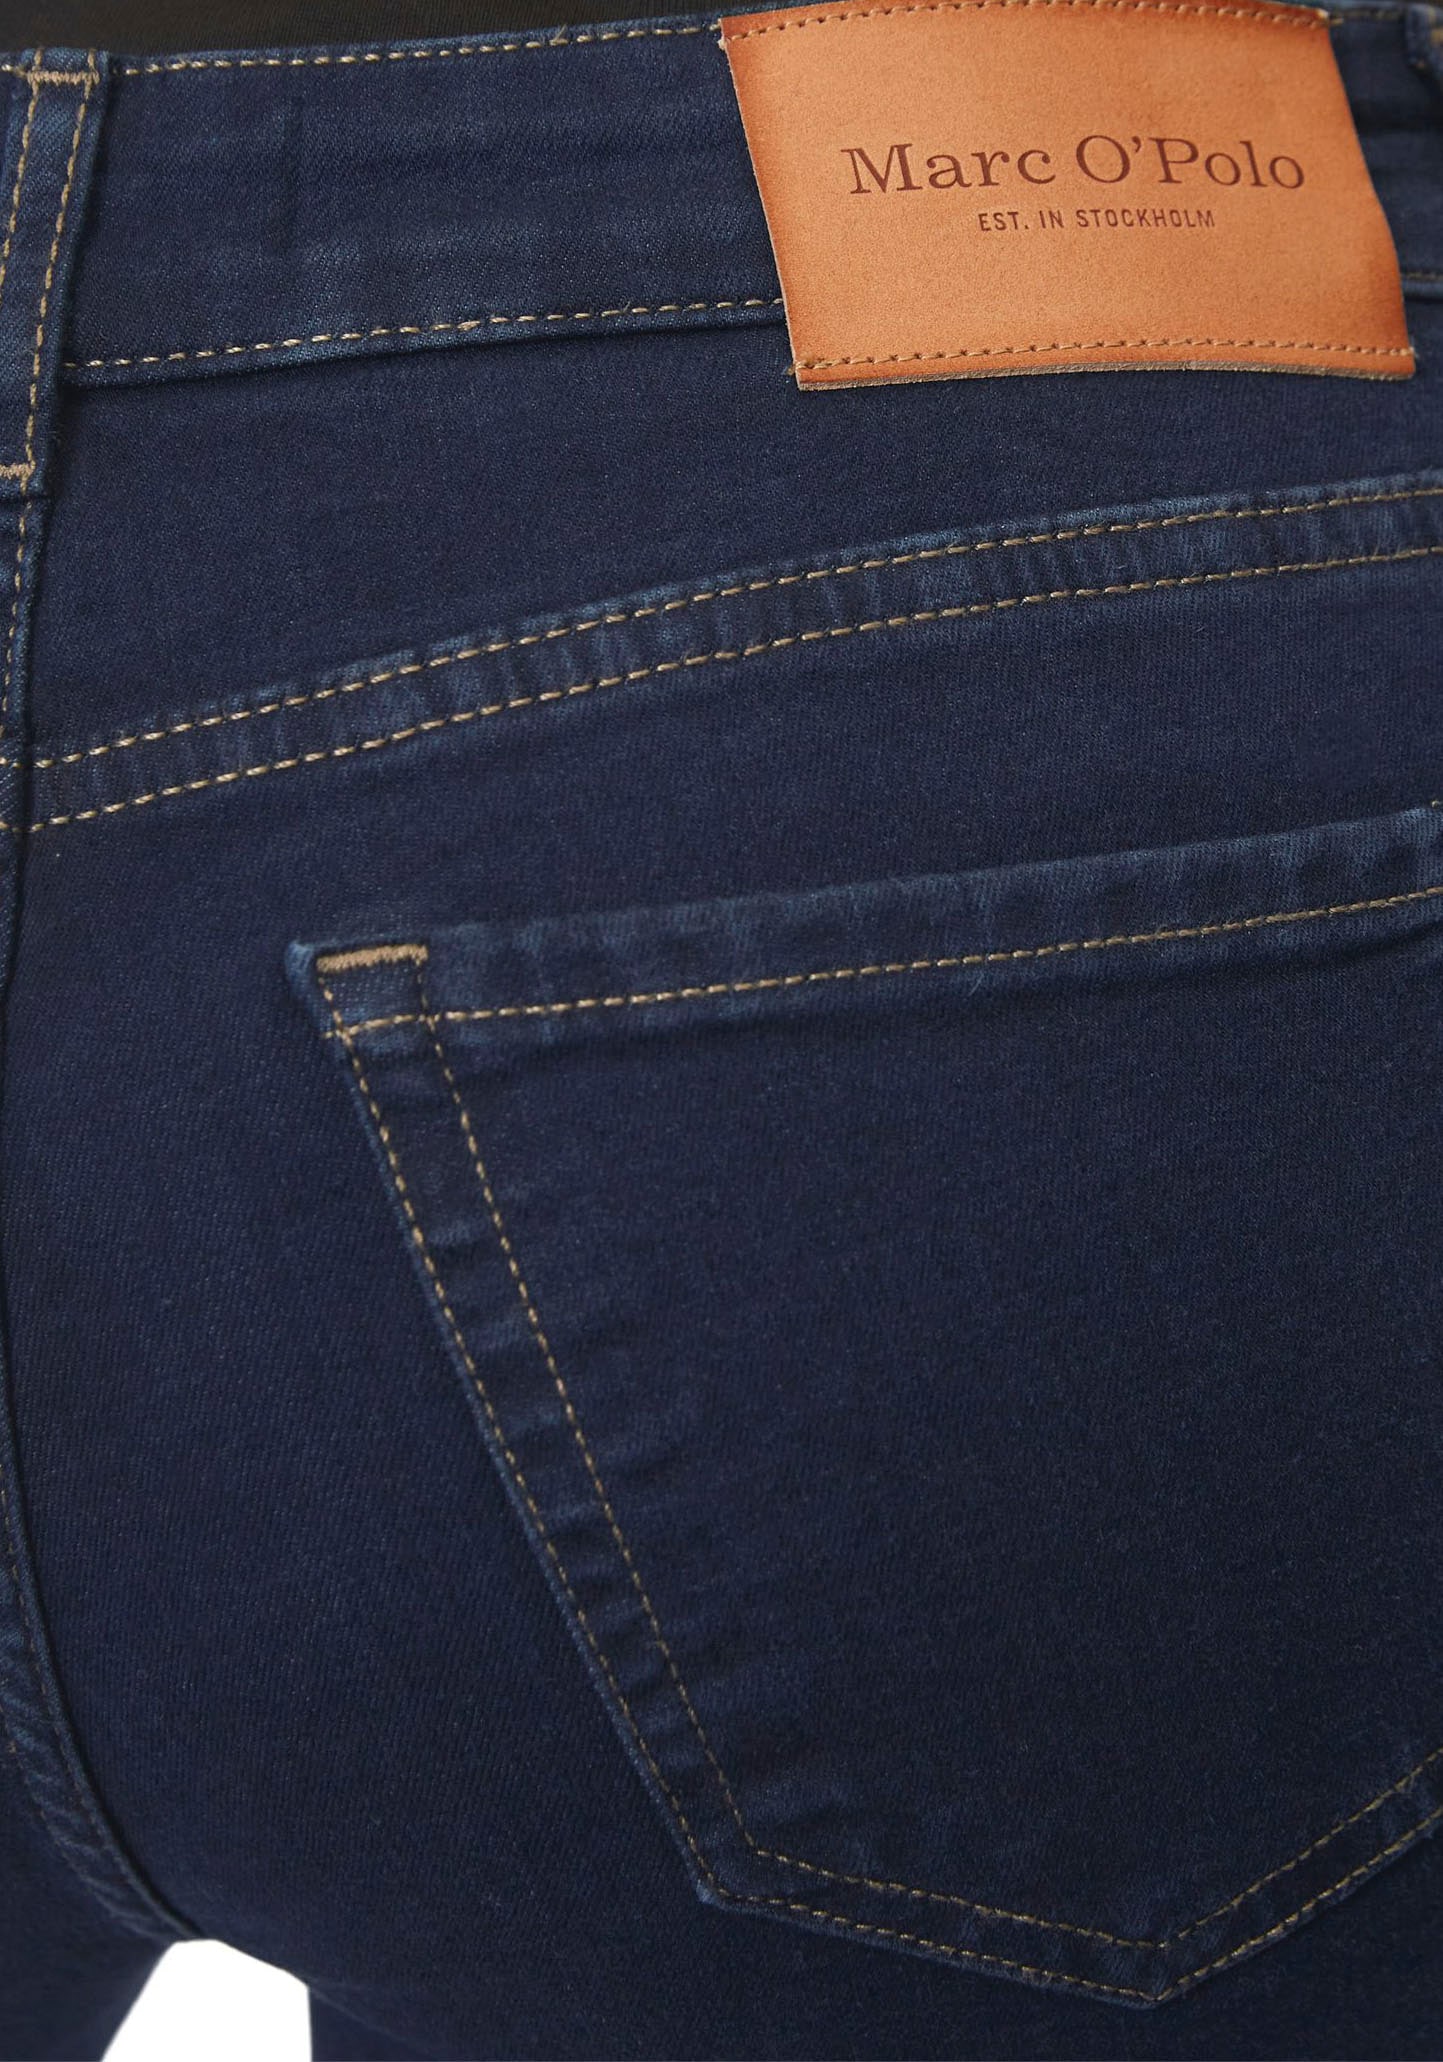 Marc O'Polo 5-Pocket-Jeans »Albi«, aus stretchigem Bio-Baumwoll-Mix